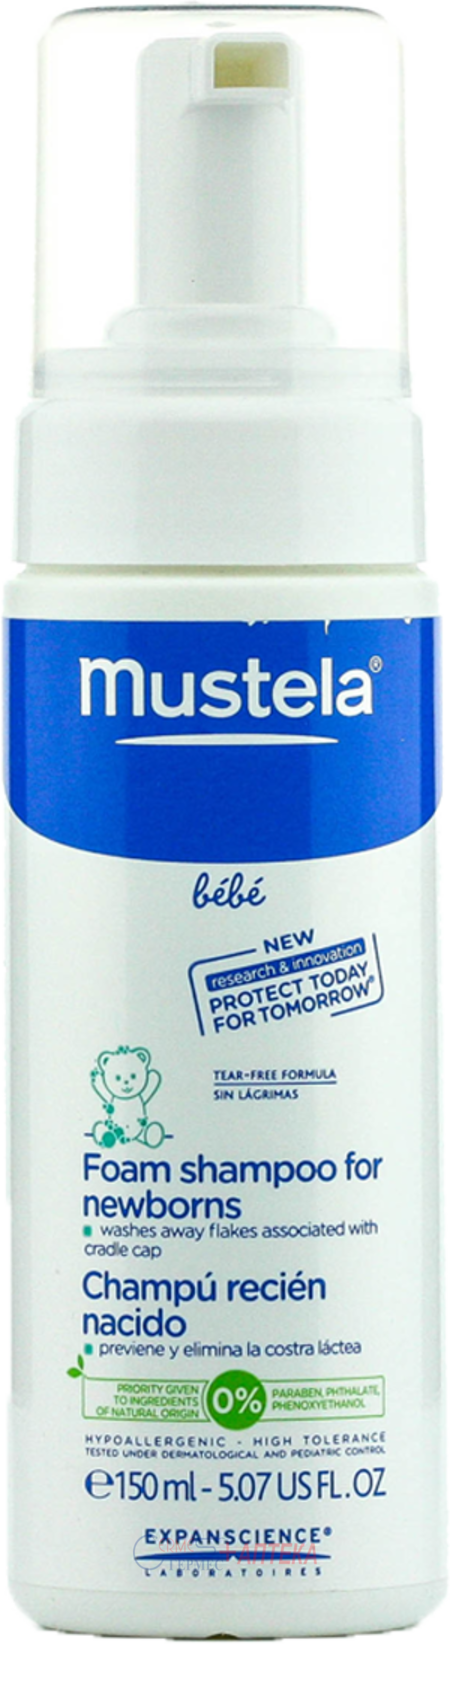 MUSTELA Foam Shampoo for Newborns 150ml - Пена-шампунь для новорожденных 150 мл.